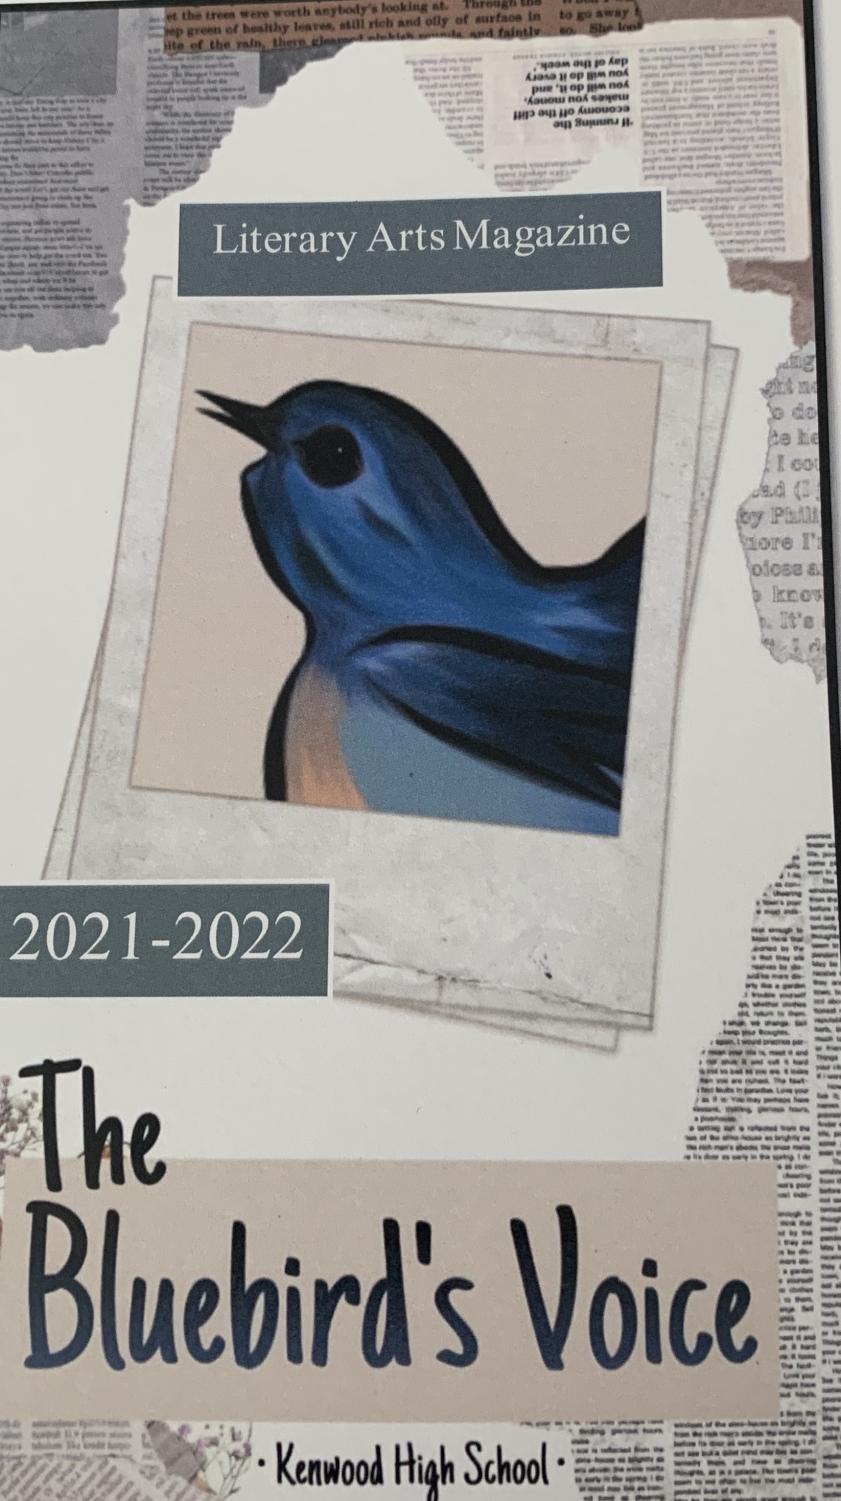 Bluebird Voice literary magazine cover art designed by Ashley Lewis.